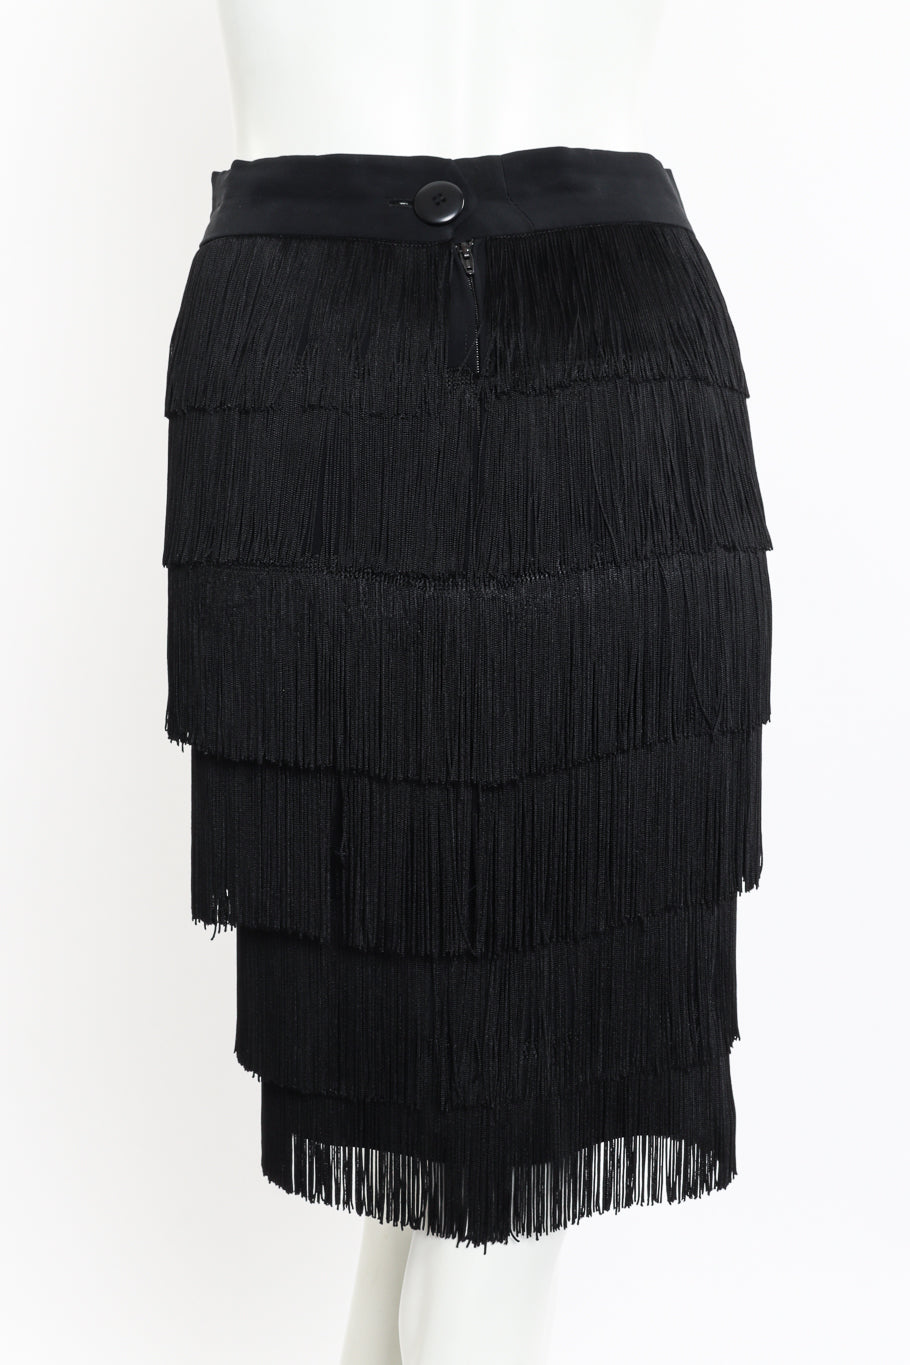 Vintage Moschino Couture Fringe Jacket and Skirt Set skirt back on mannequin closeup @recessla